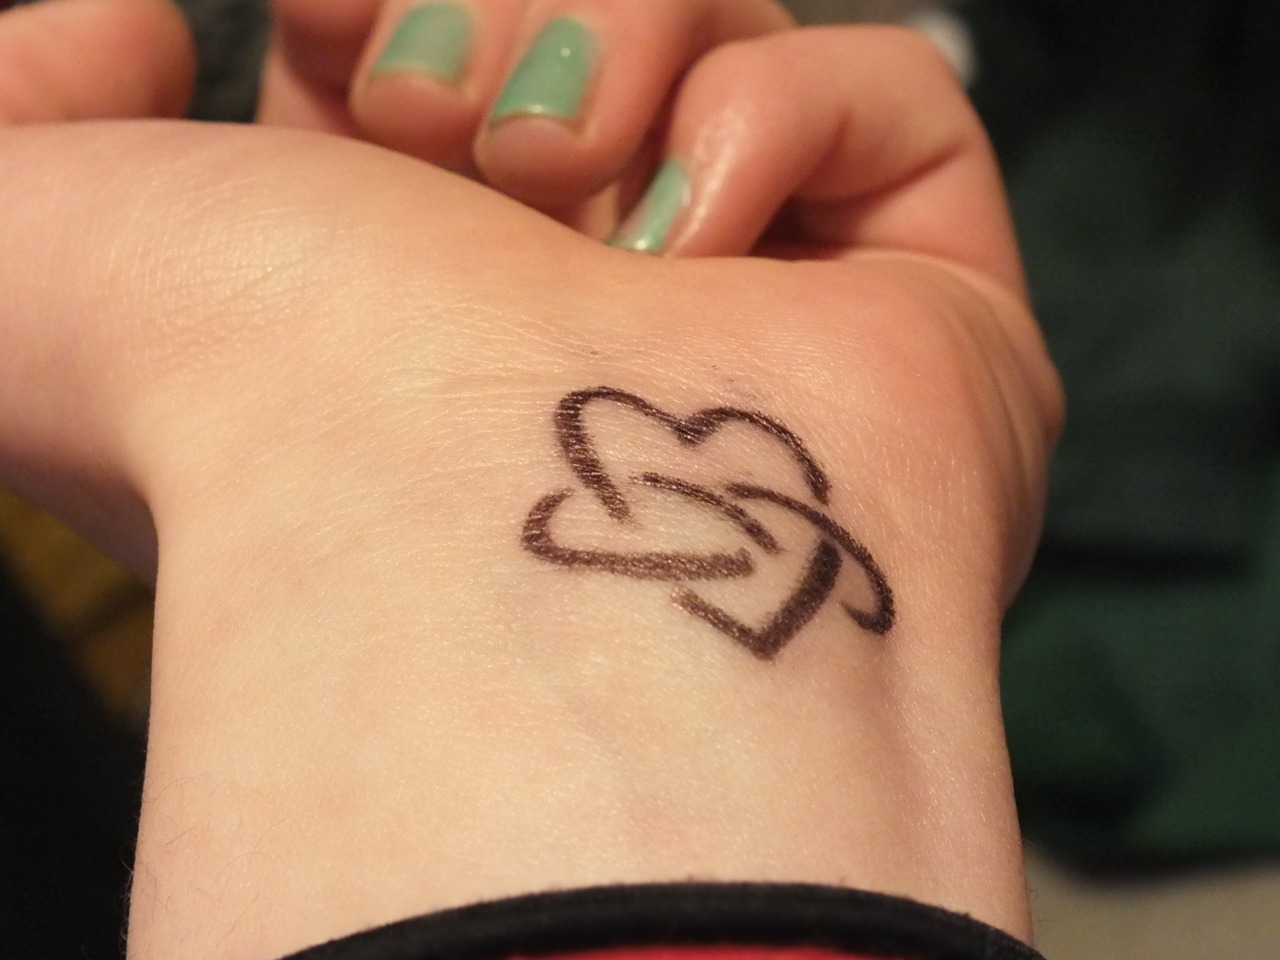 Female Wrist Tattoo - Inner Wrist Tattoo Design with Heart